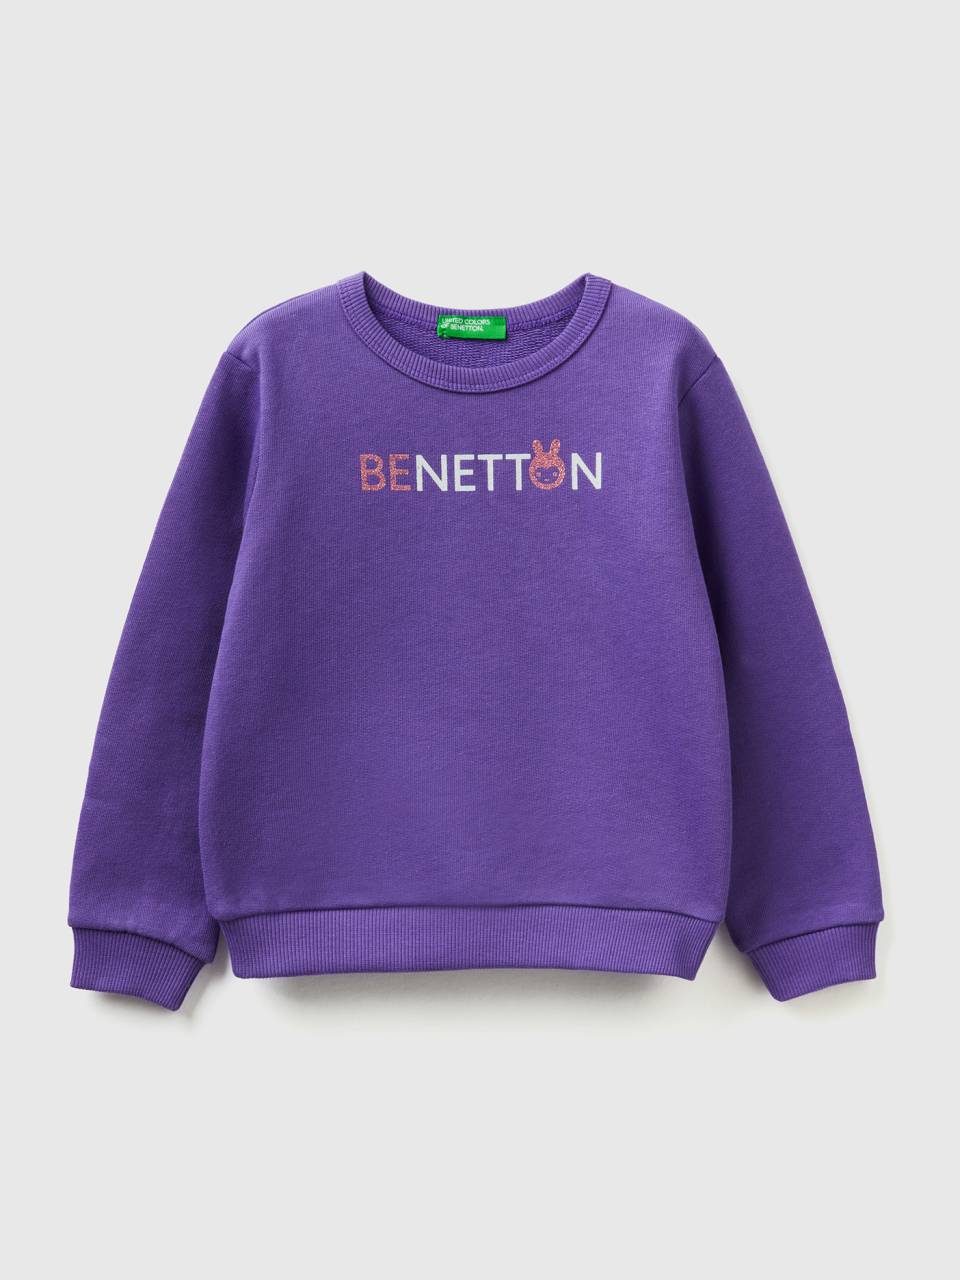 Benetton sweatshirt - in print with organic glittery Violet | Purple cotton